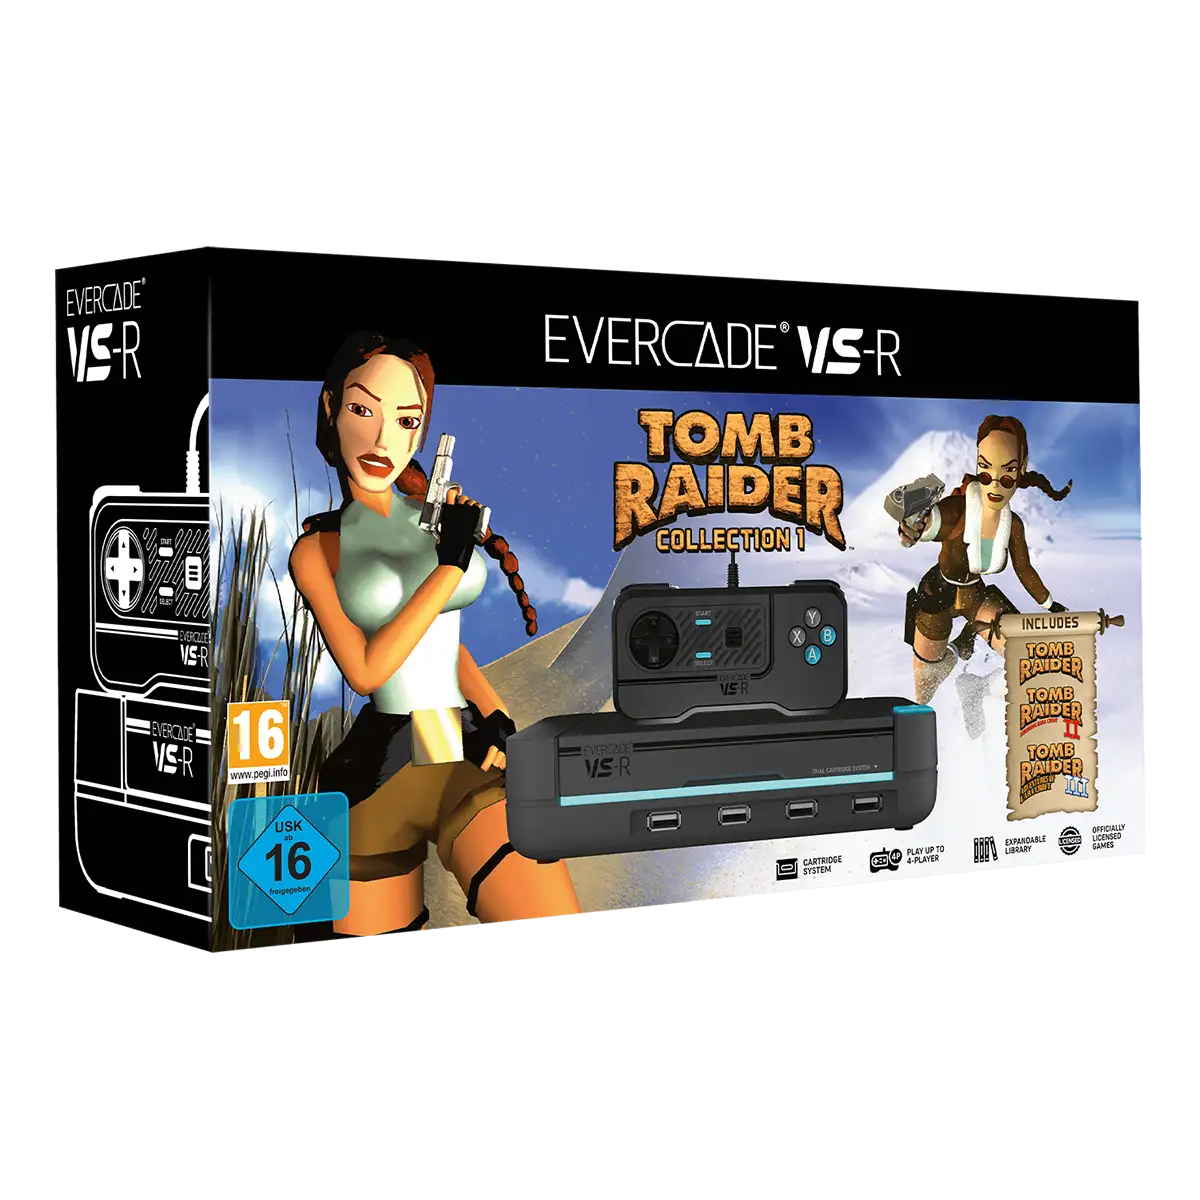 Evercade VS-R + Tomb Raider Collection 1 Cover